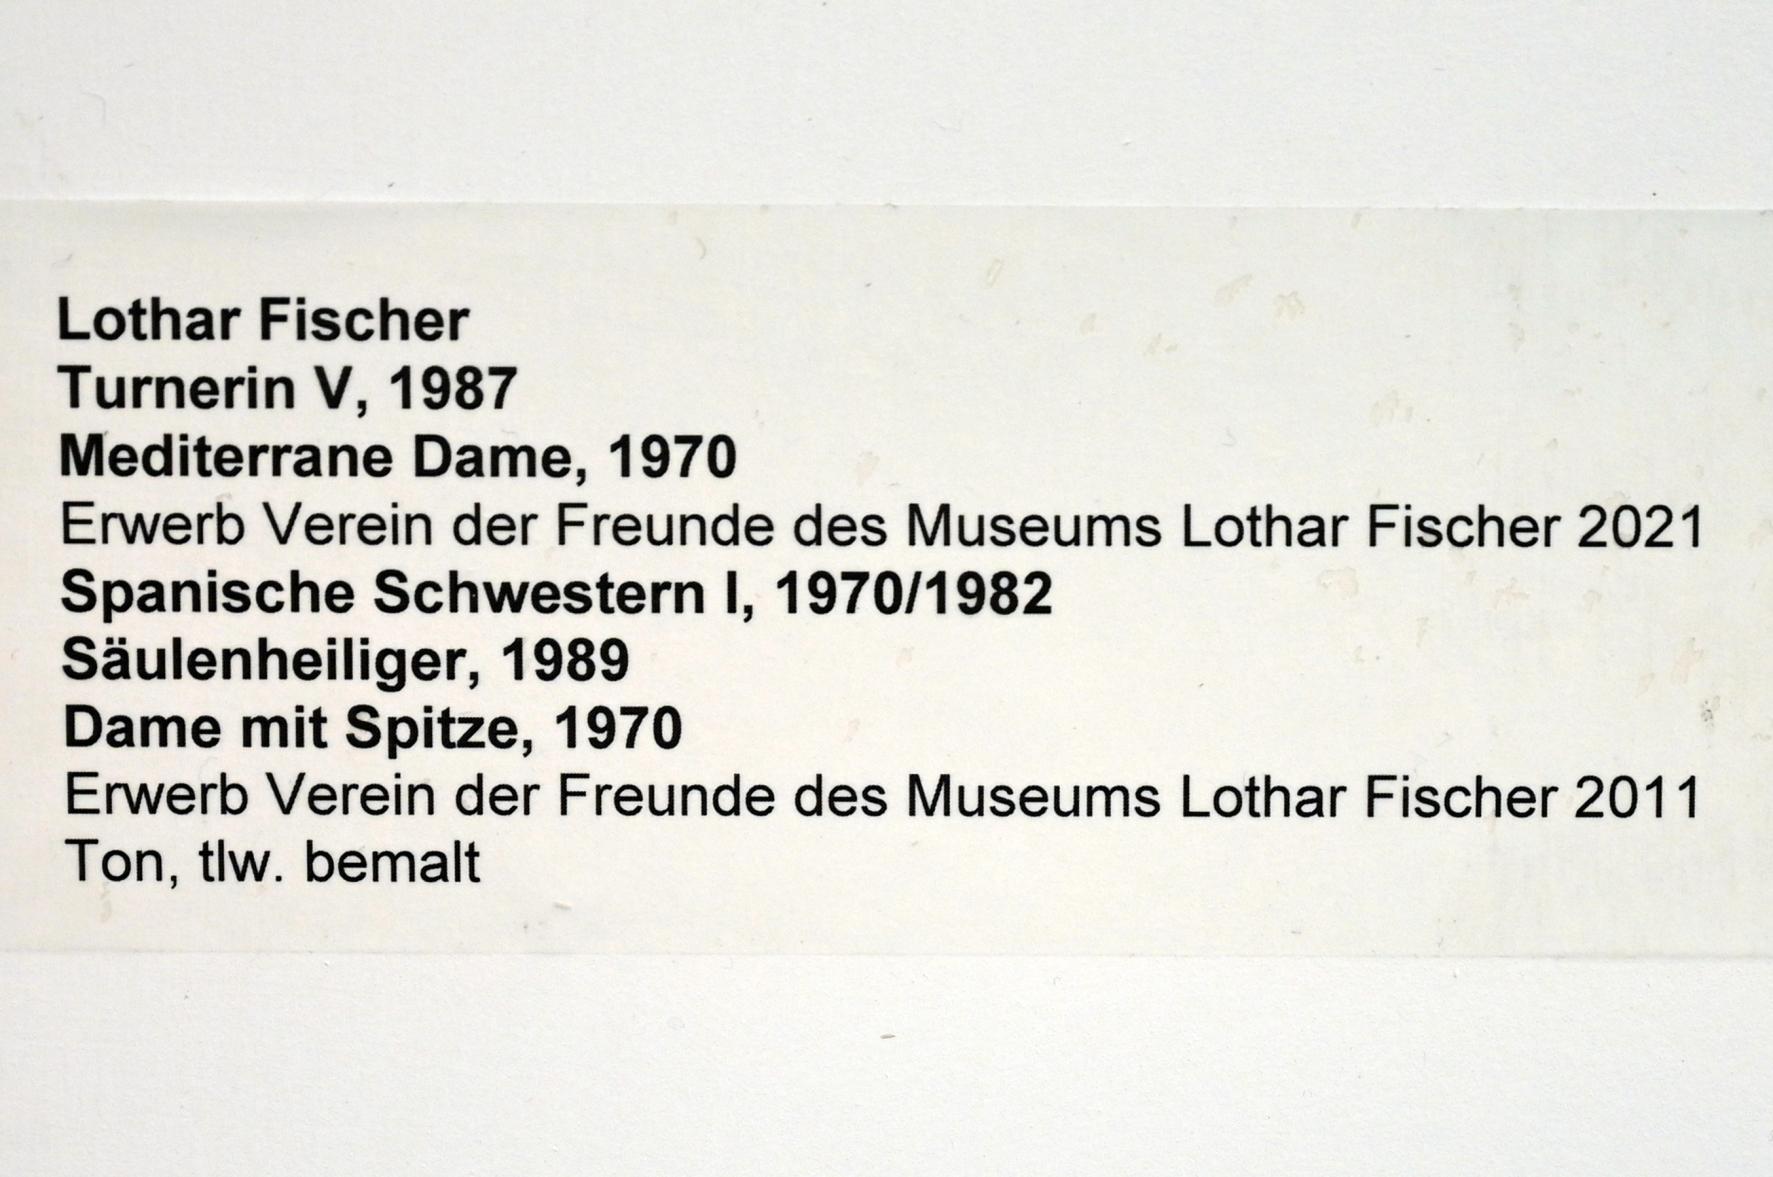 Lothar Fischer (1959–2004), Säulenheiliger, Neumarkt in der Oberpfalz, Museum Lothar Fischer, Obergeschoß Raum 6, 1989, Bild 2/2